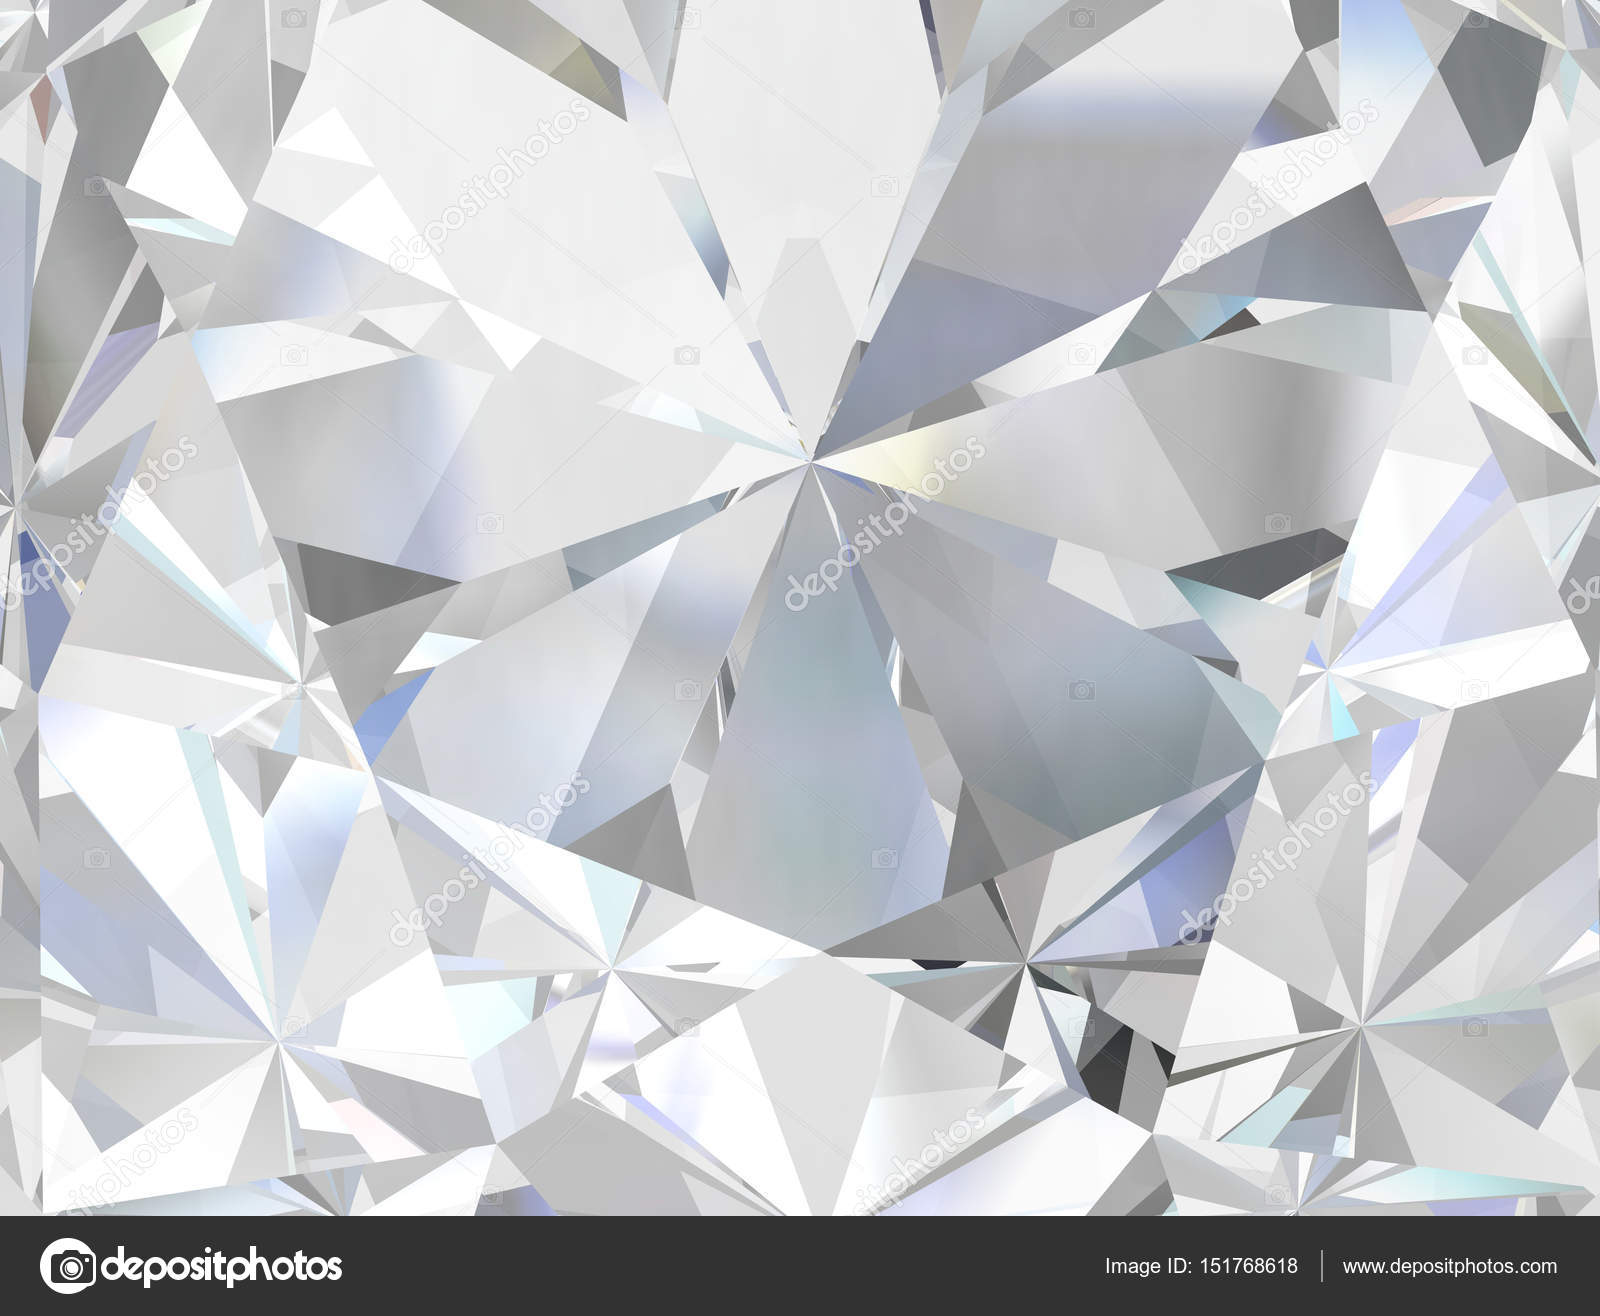 Diamond texture Stock Photos, Royalty Free Diamond texture Images |  Depositphotos